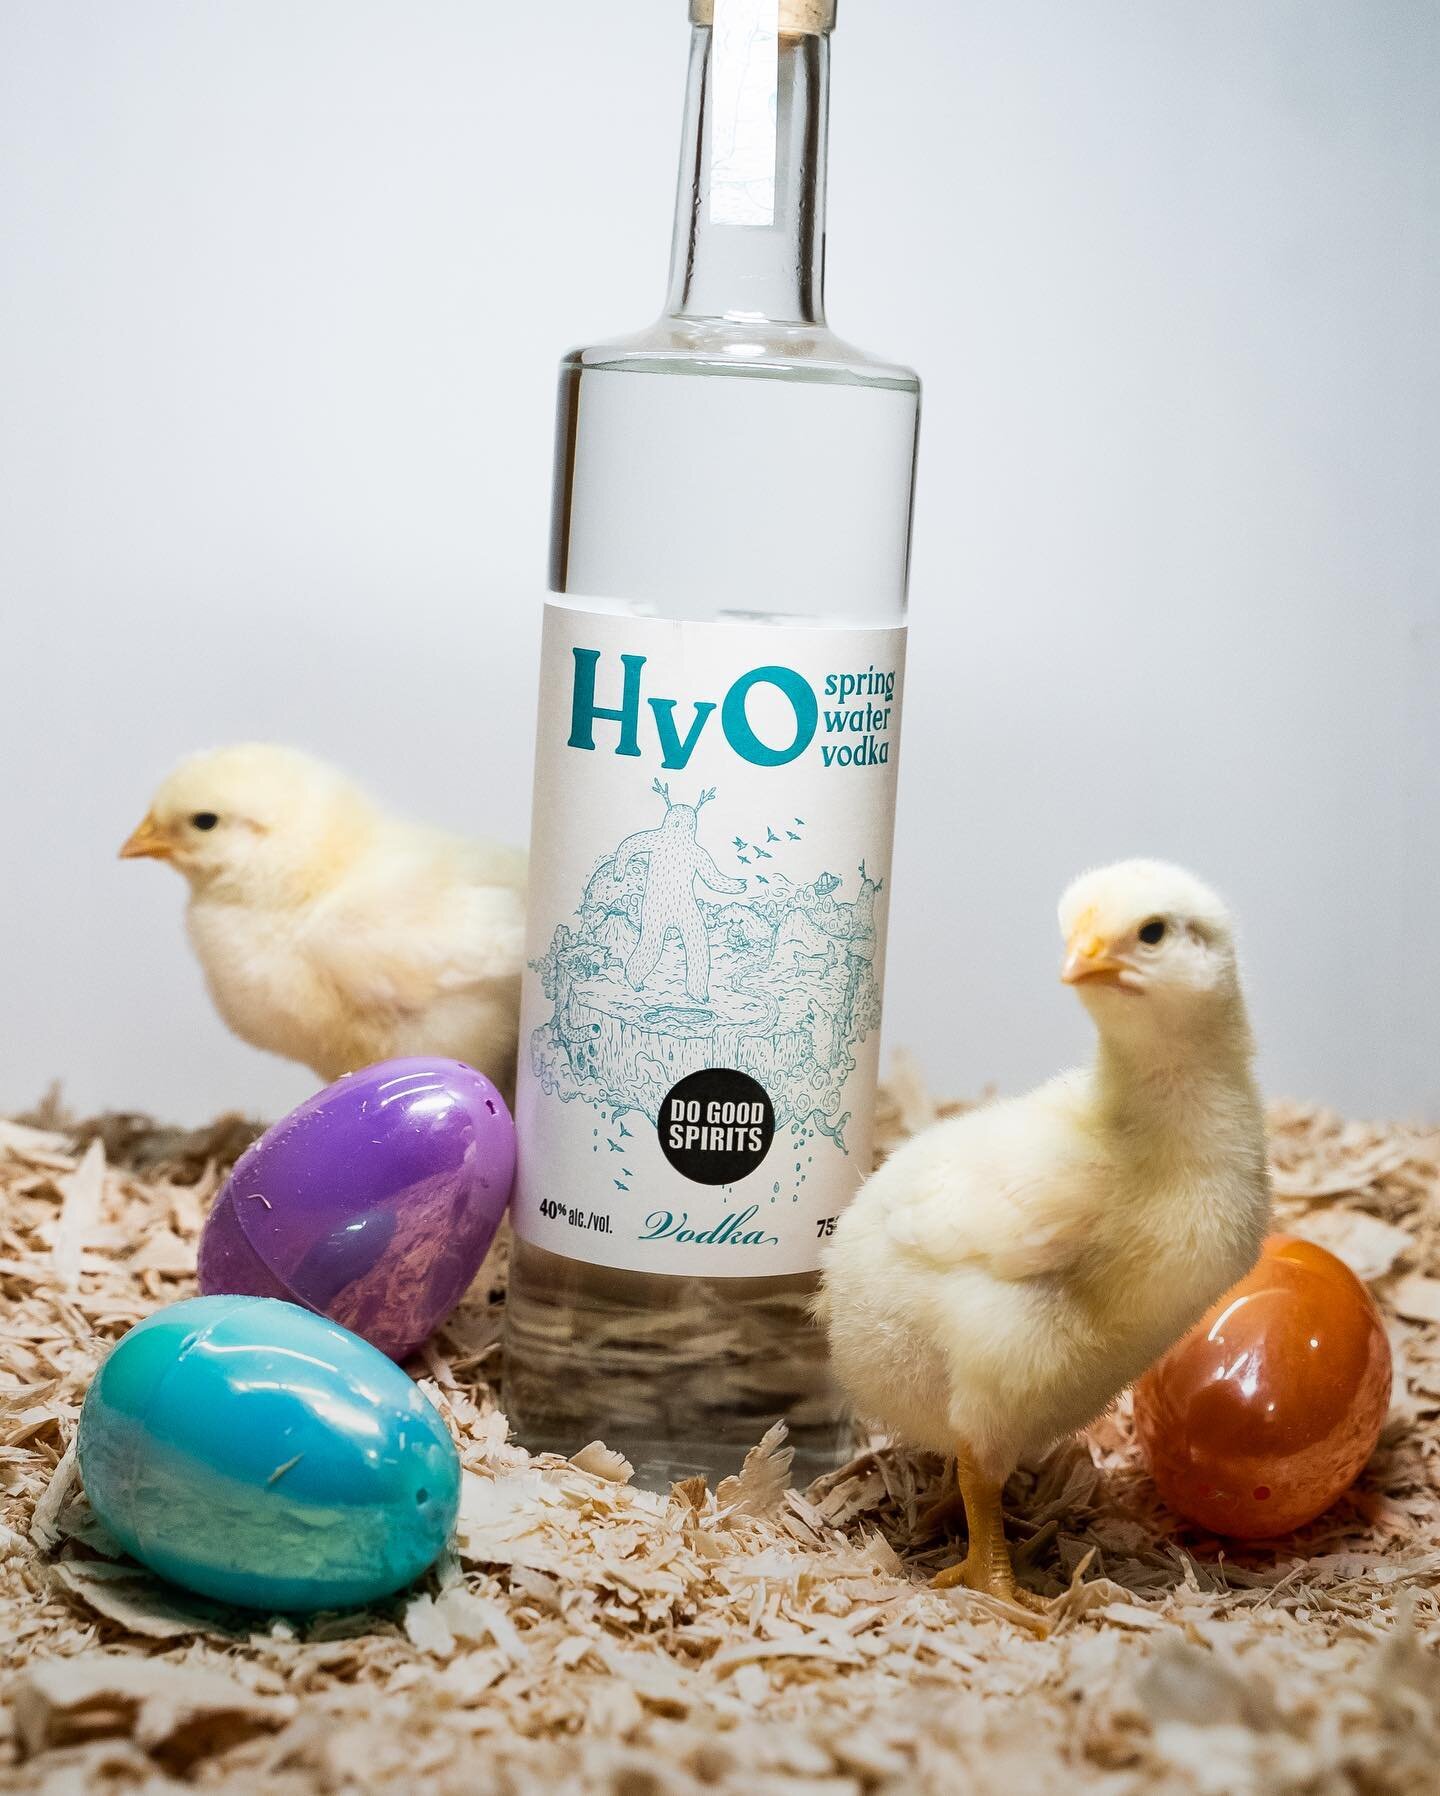 S&rsquo;cute 🐣
Happy Easter long weekend! 

.
.
.
#Easter #HoppyEaster #Scute#HvOSpringWaterVodka #OntarioPremiumVodka #Vodka #LCBO #Cocktails #CraftCocktails #Toronto #Ottawa #SaultSainteMarie #TheSoo #Windsor #Stouffville #Huntsville #Bracebridge 